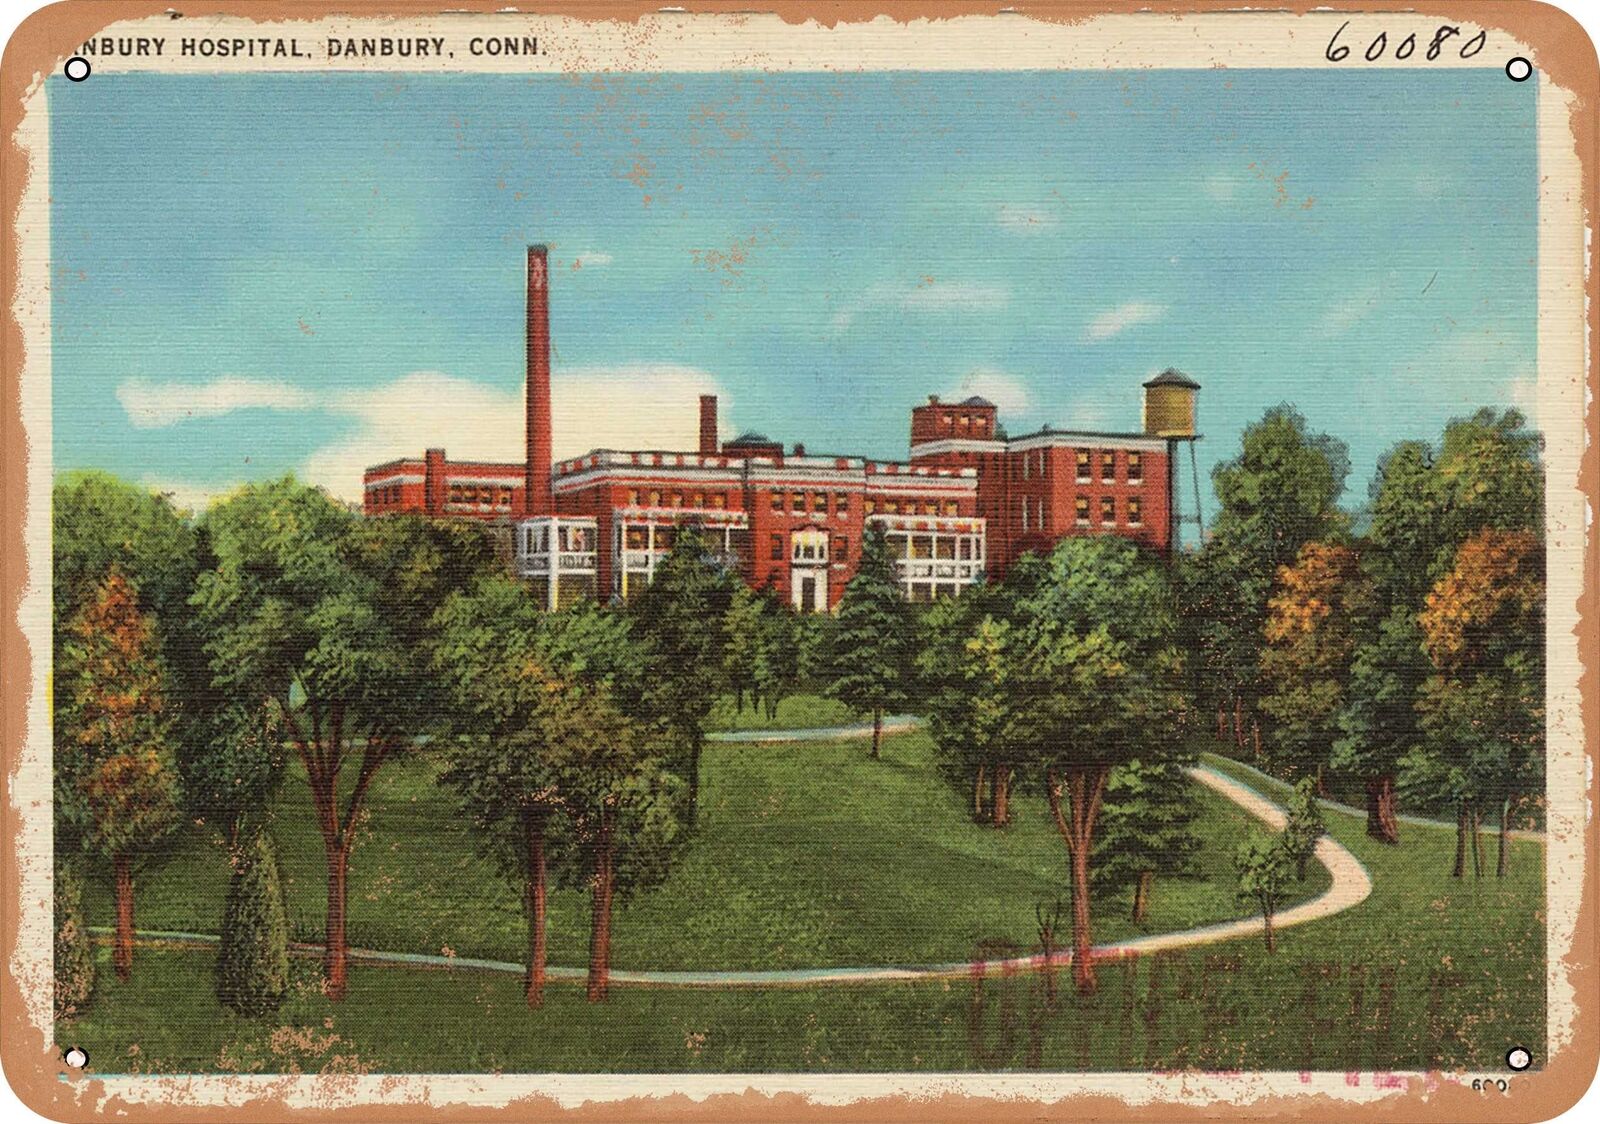 Metal Sign - Connecticut Postcard - Danbury Hospital, Danbury, Conn.